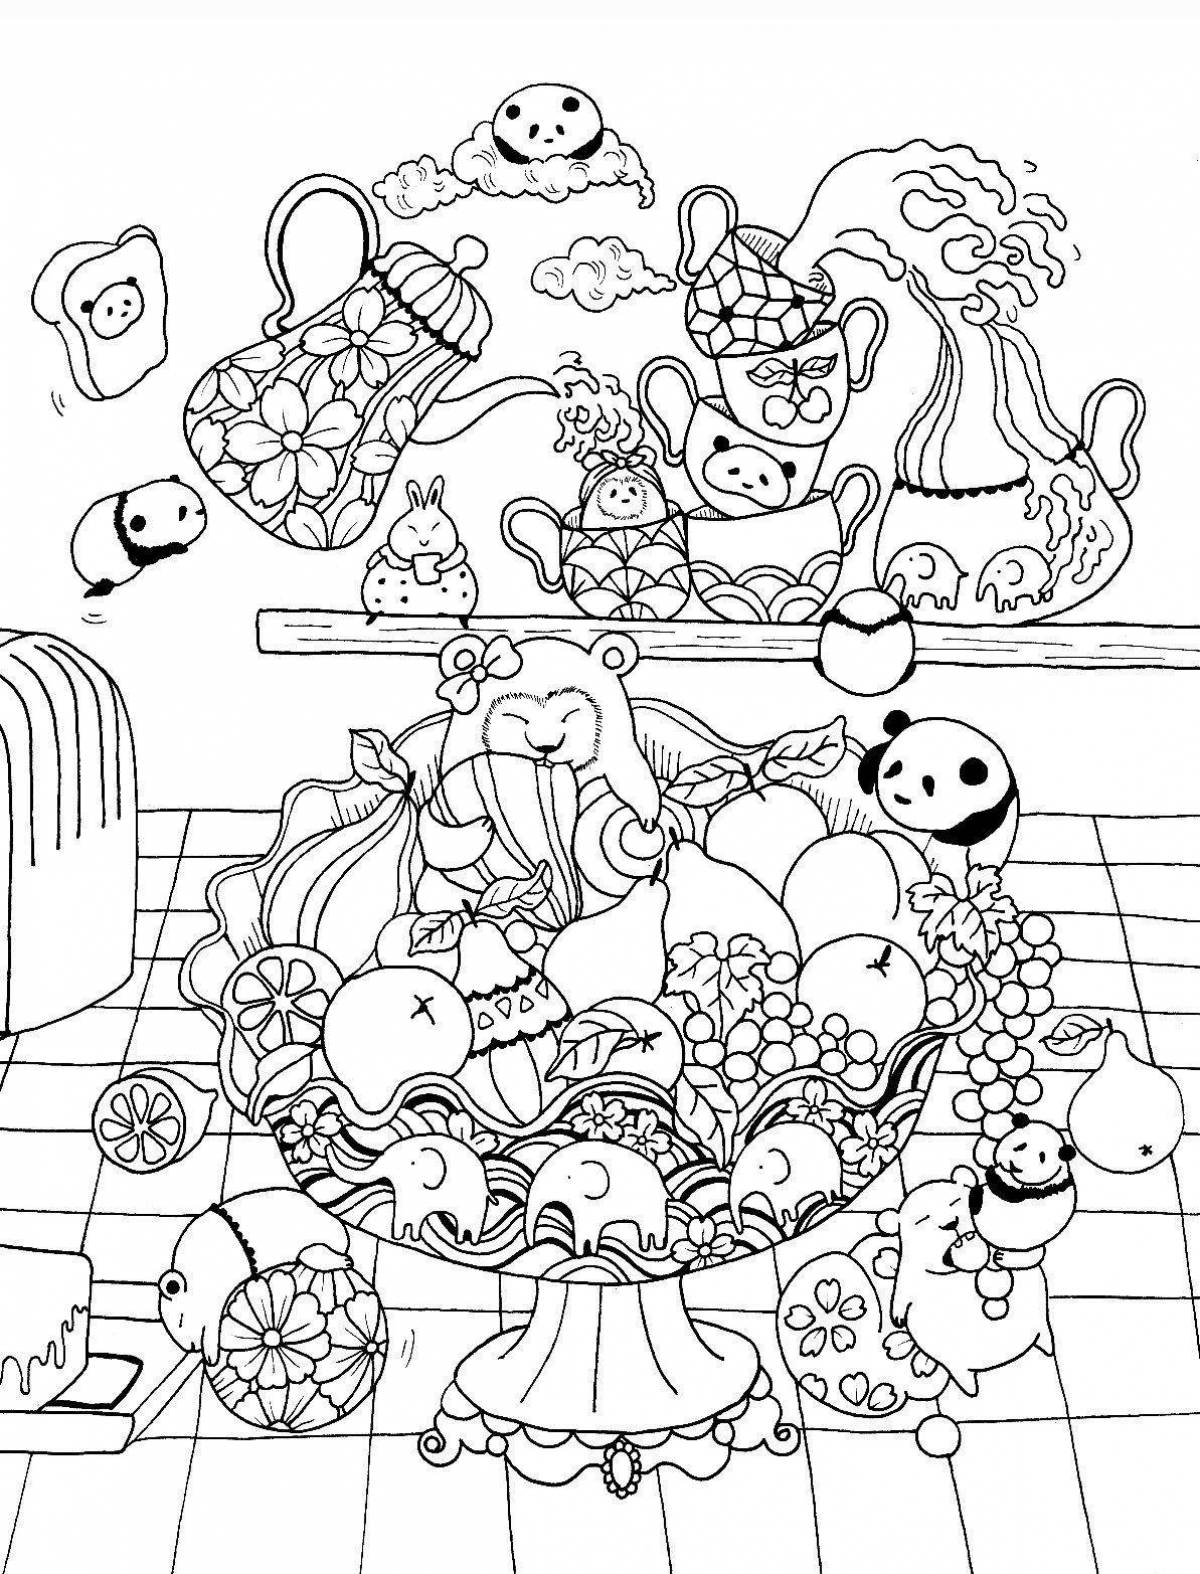 Happy lulu mayo coloring book